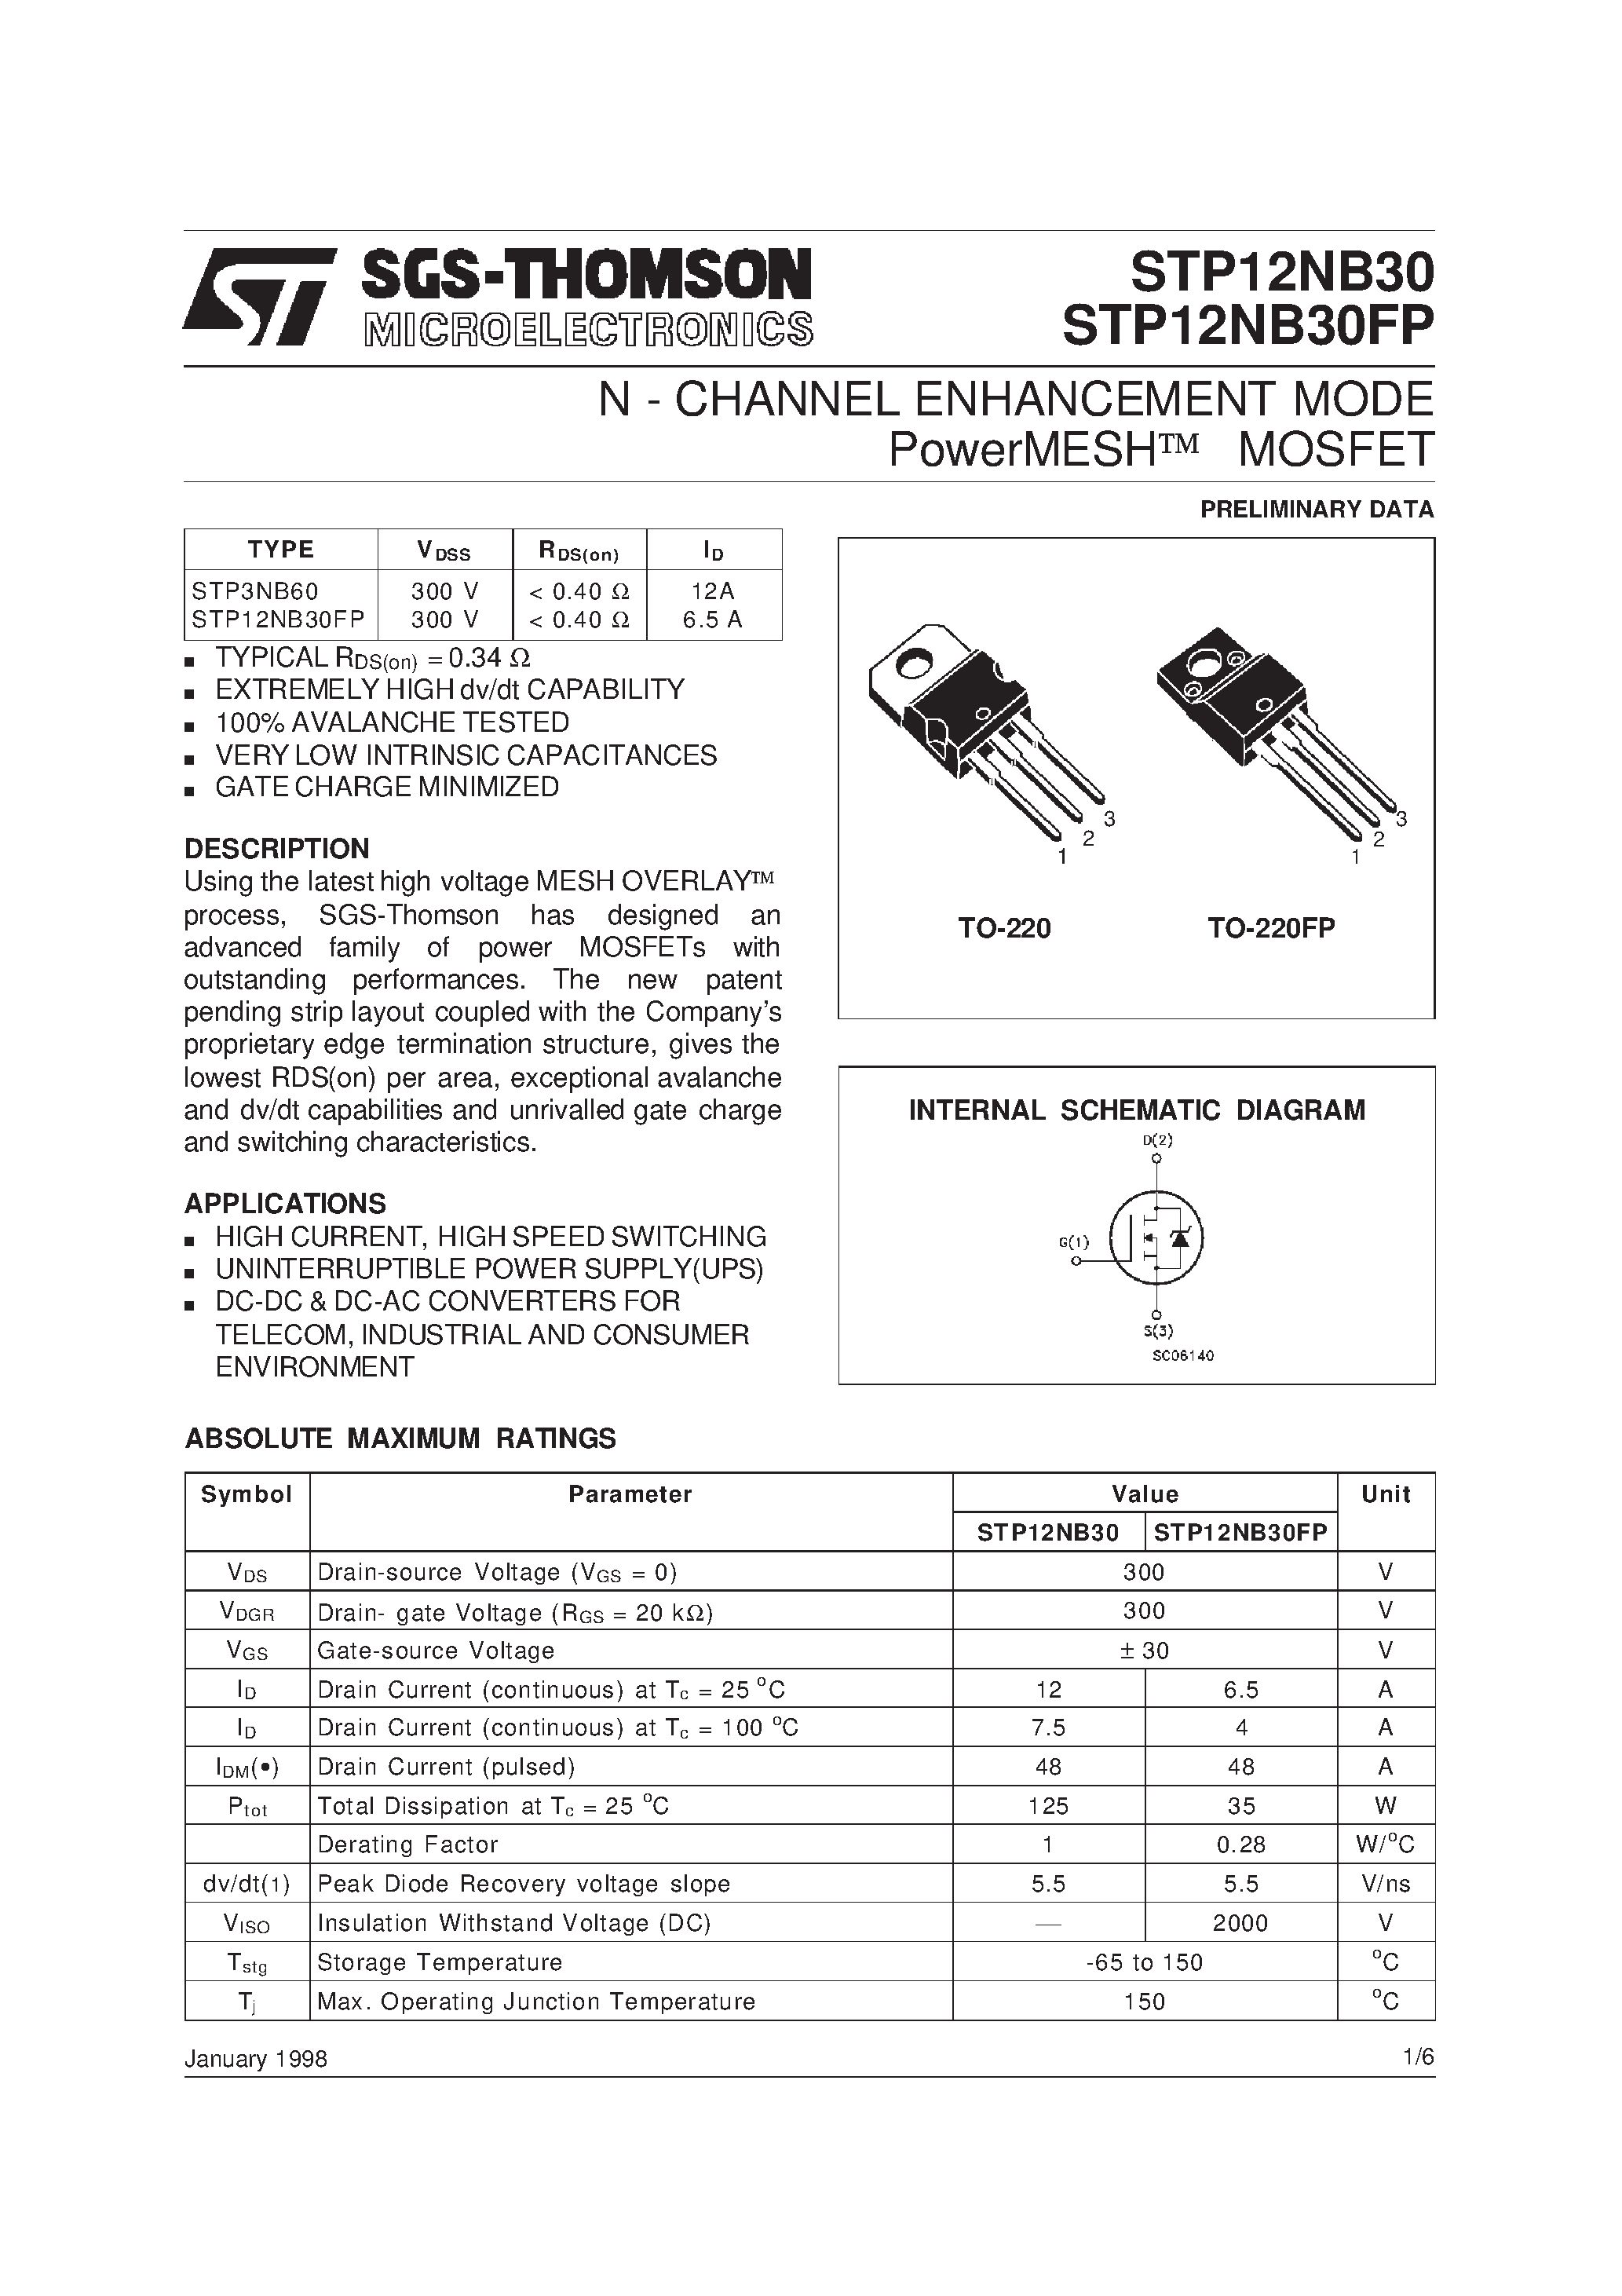 Datasheet STP12NB30 - N - CHANNEL ENHANCEMENT MODE PowerMESH MOSFET page 1